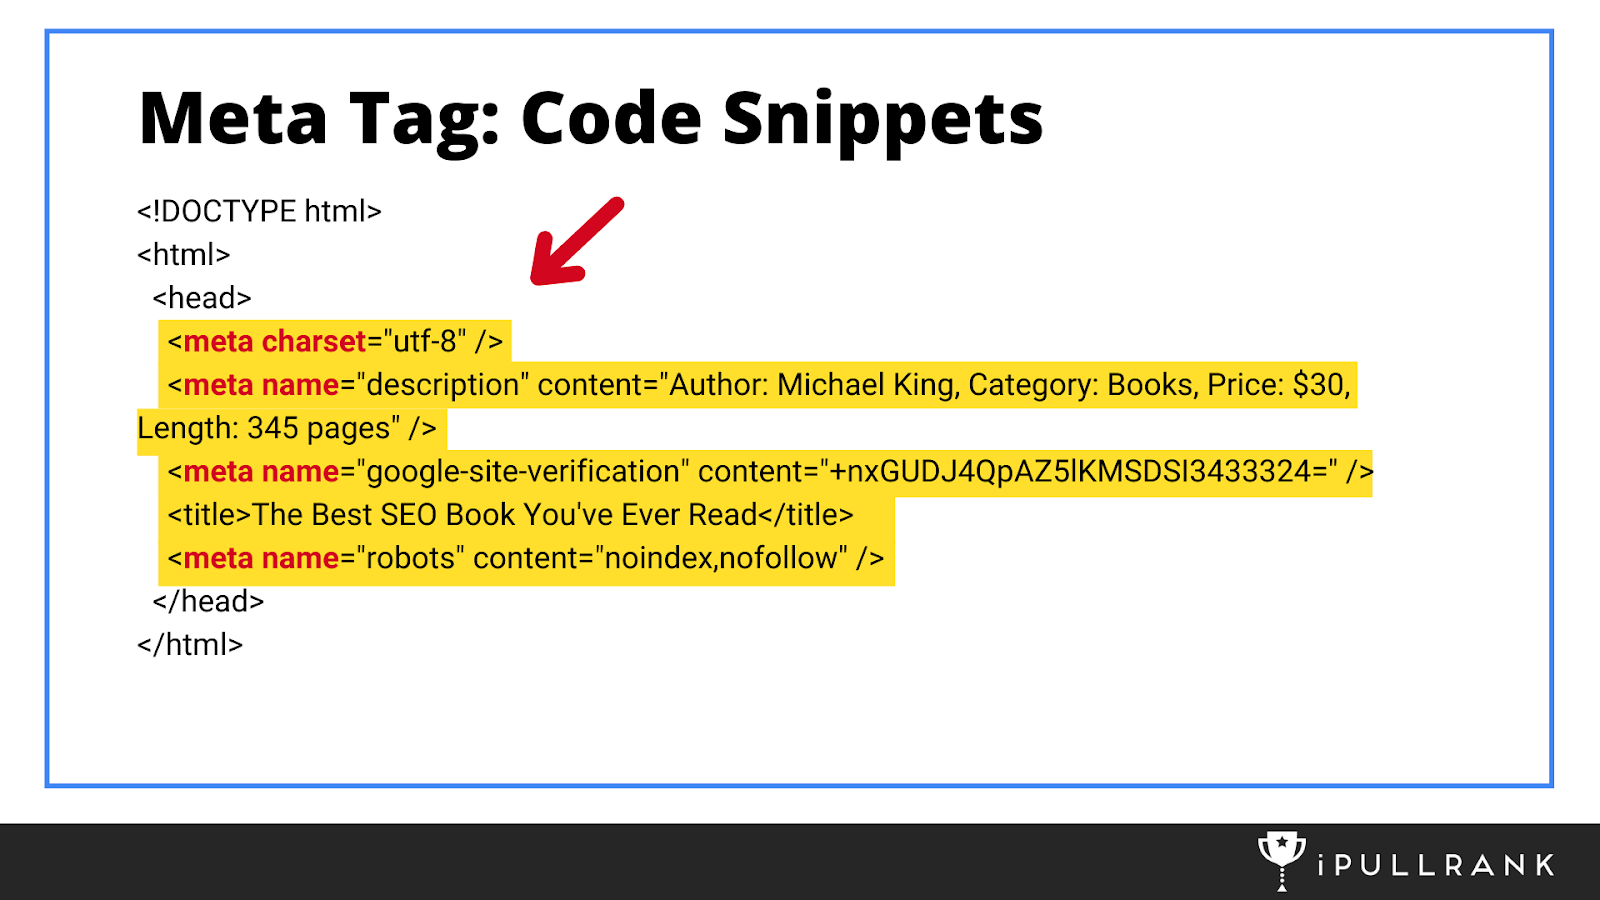 Meta Tag Code Snippet example